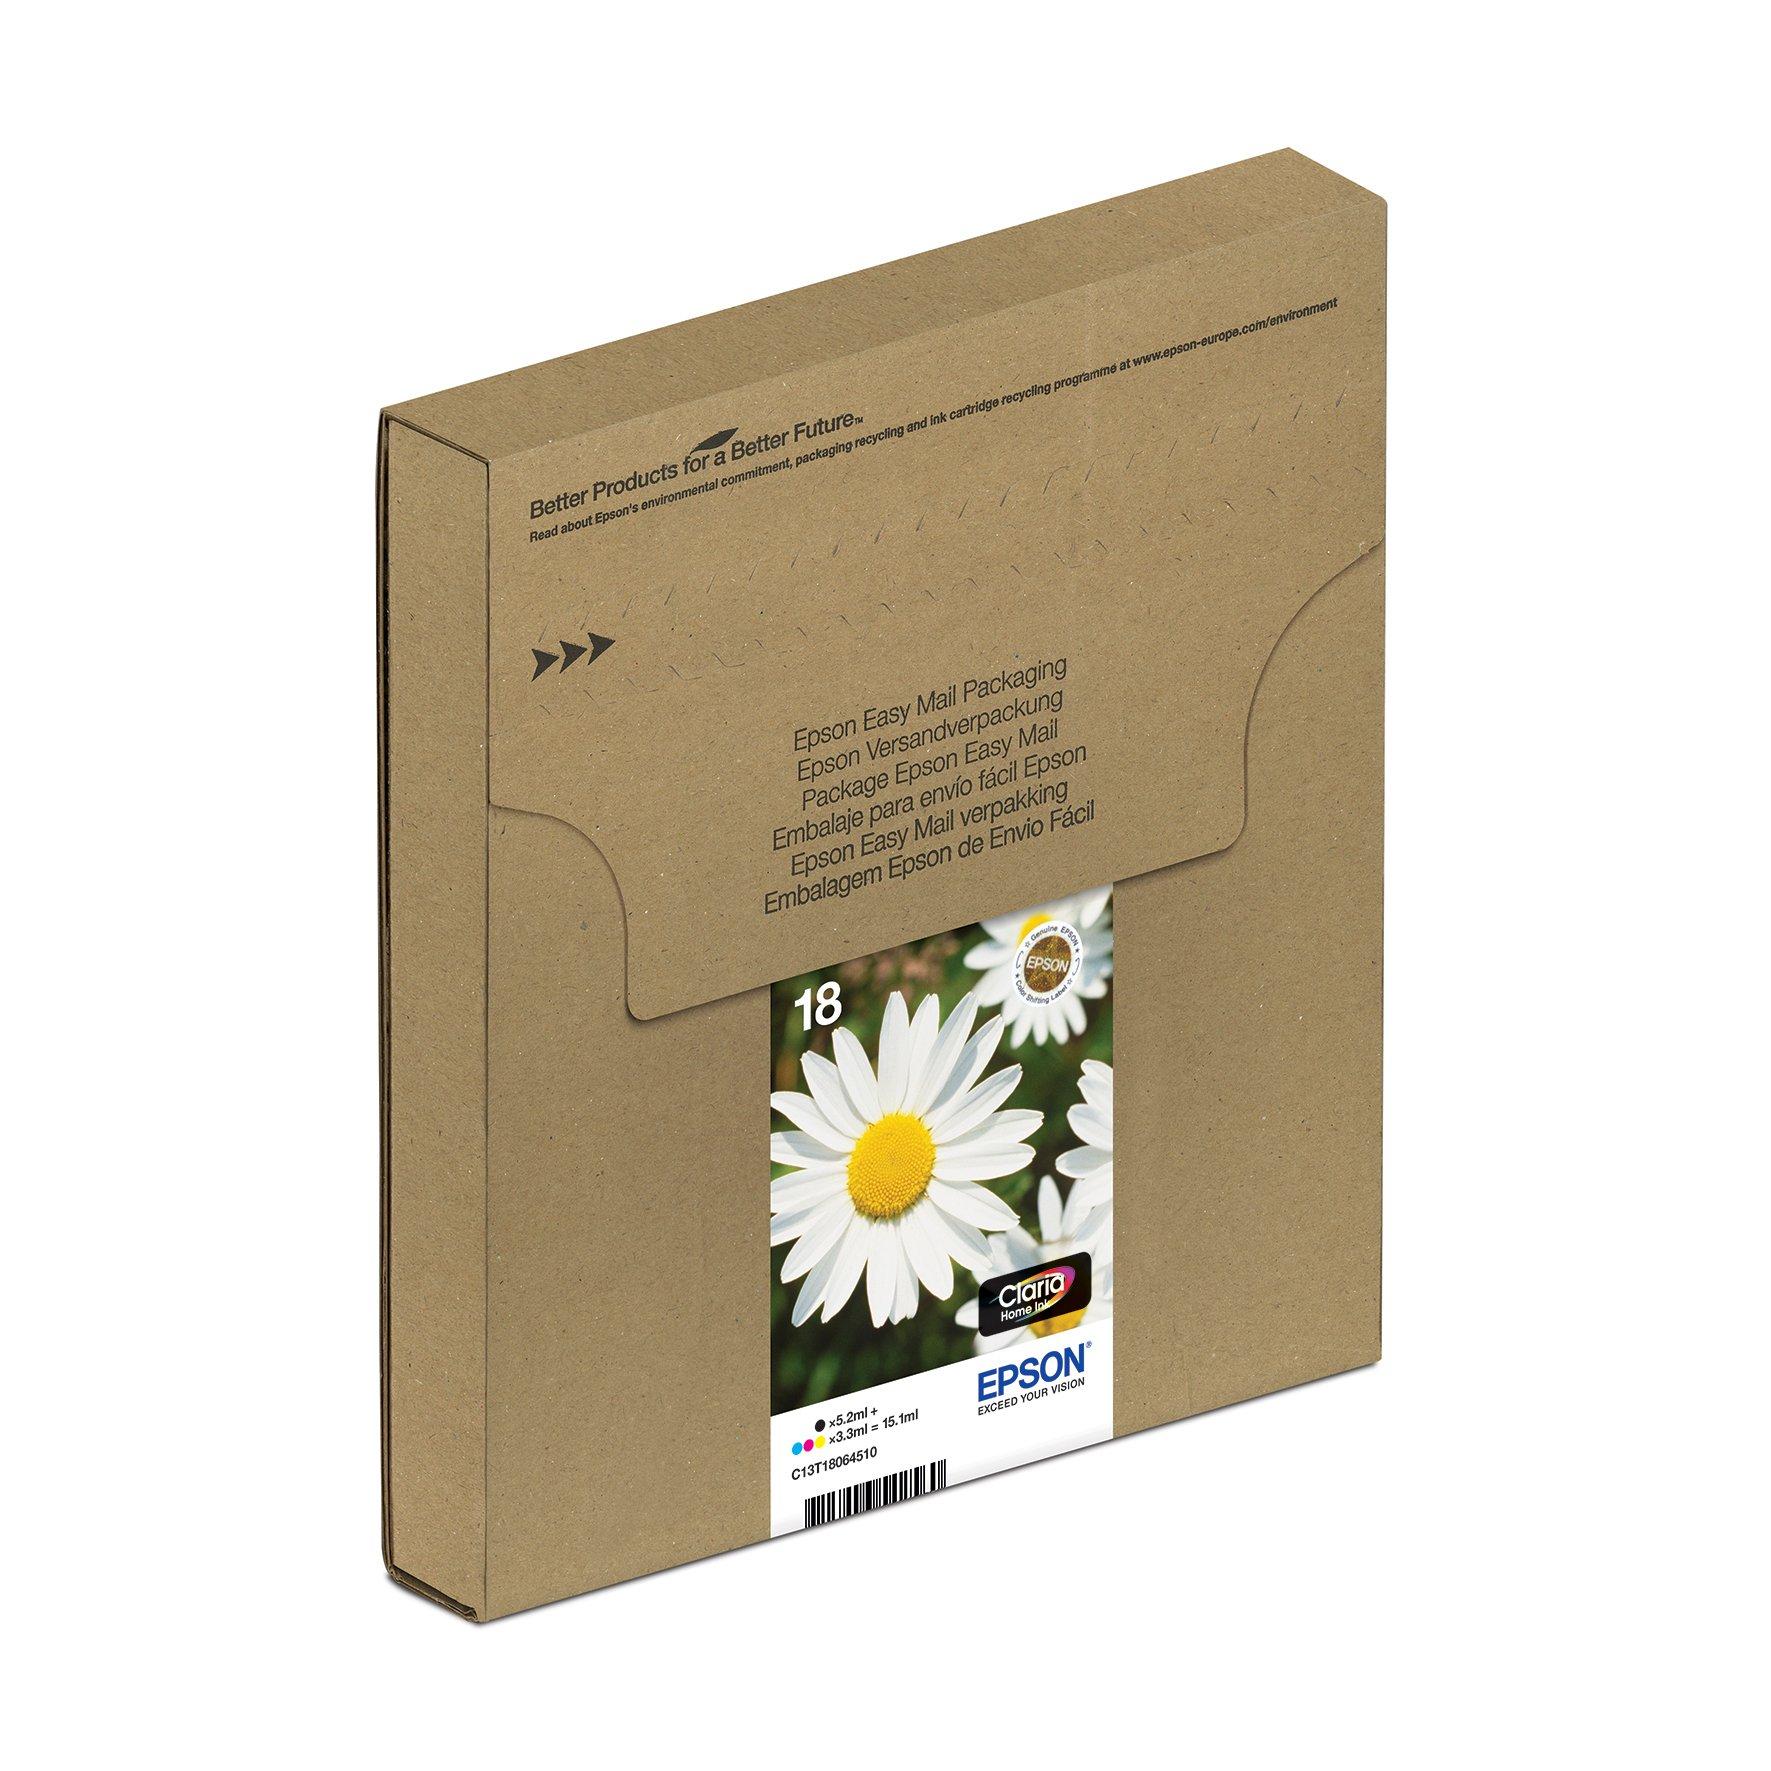 Epson | EasyMail Tintenpatronen 18 | Tinte | & Farben 4 Home Multipack Gänseblume | Tinte Österreich Claria Papier Produkte